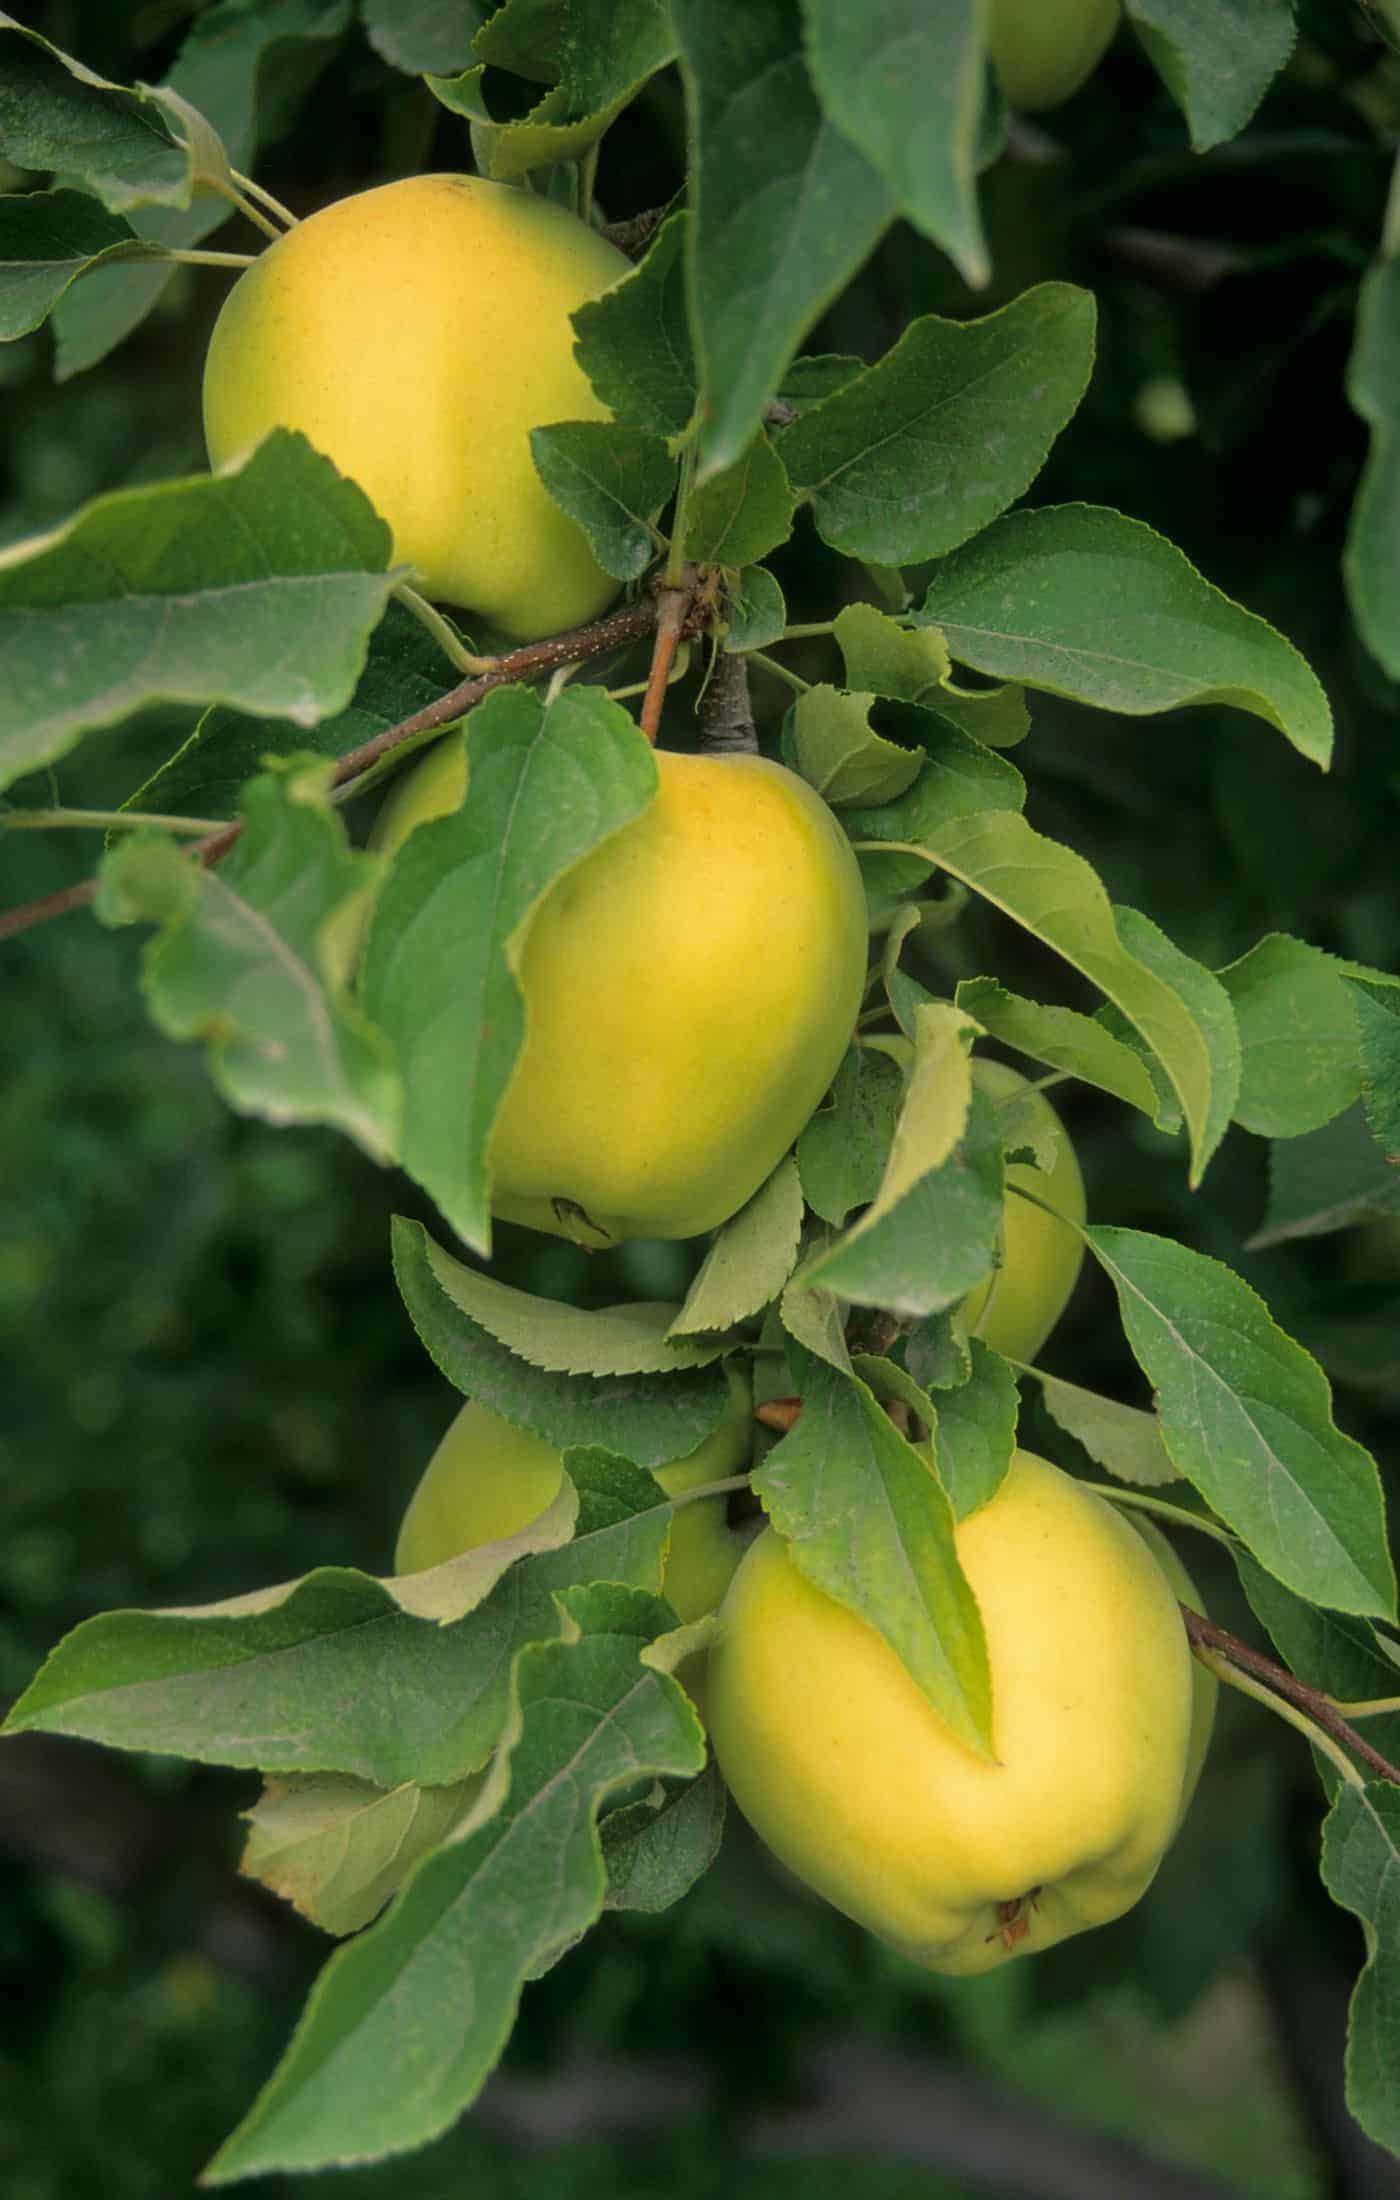 Growing golden delicious apples